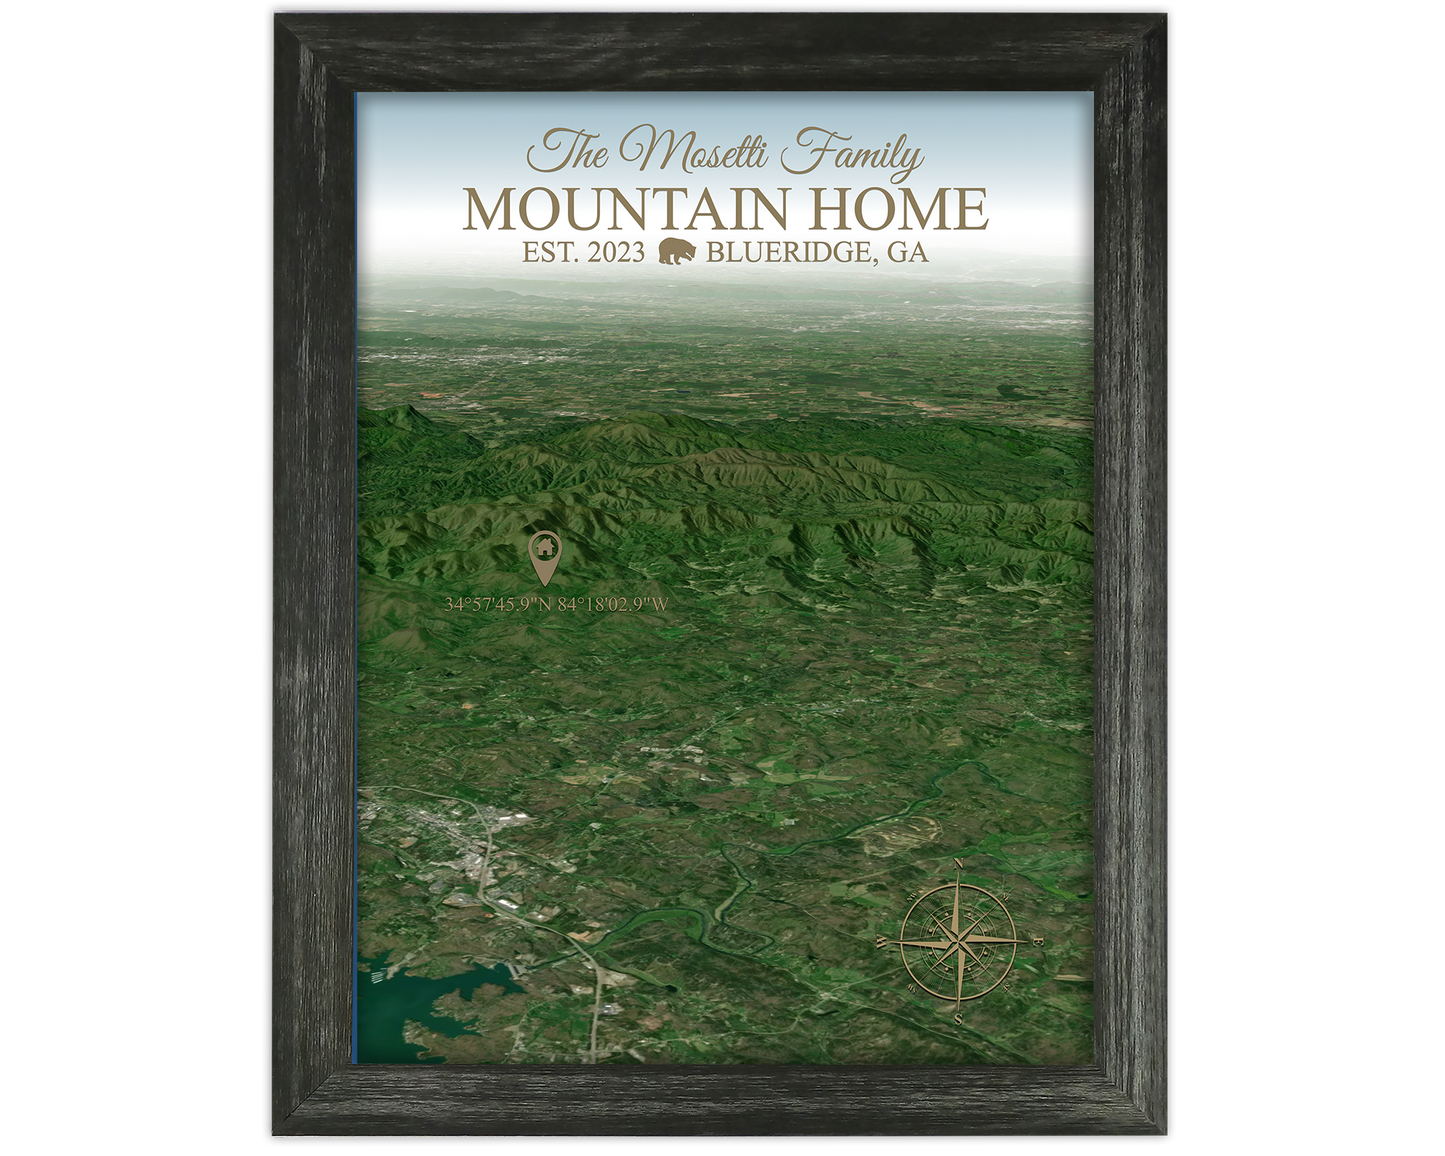 Mountain Home Map